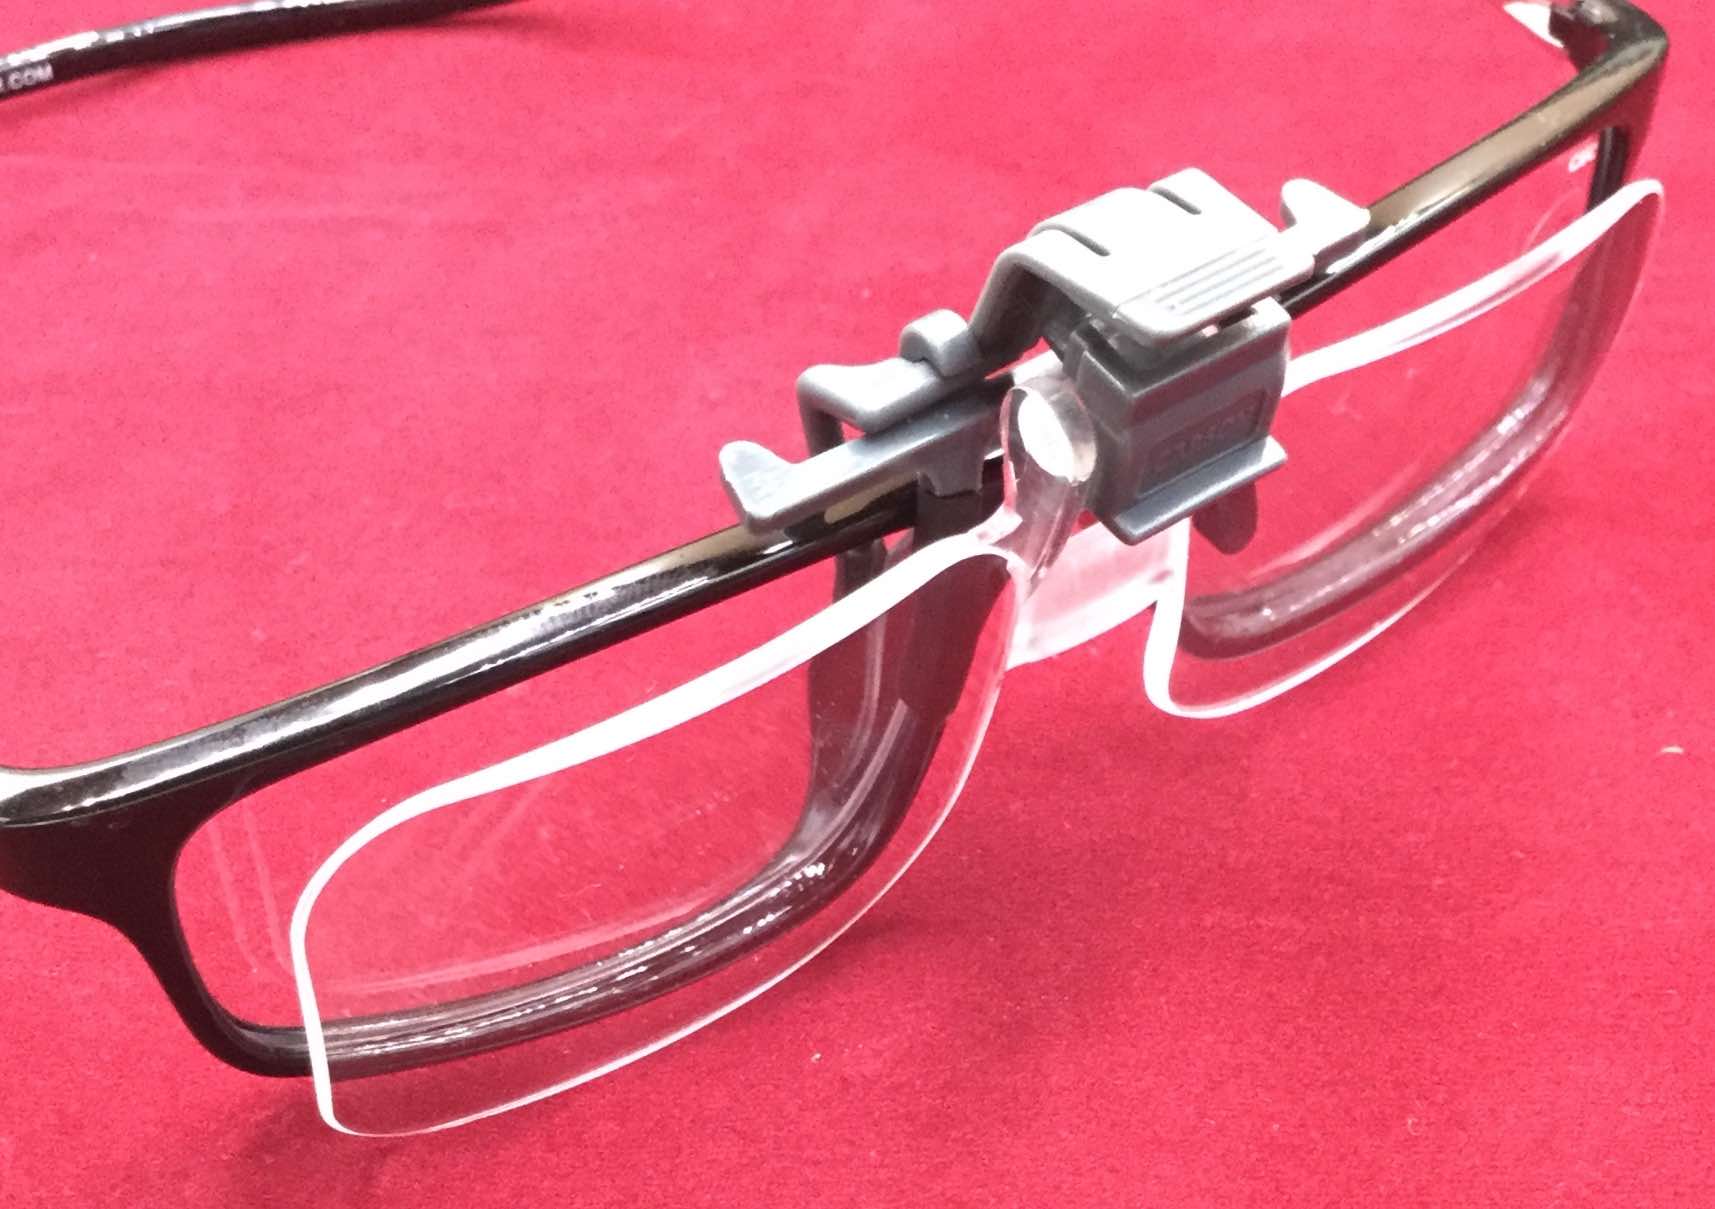 Carson Clip&Flip Glasses, Magnifying, +3.00